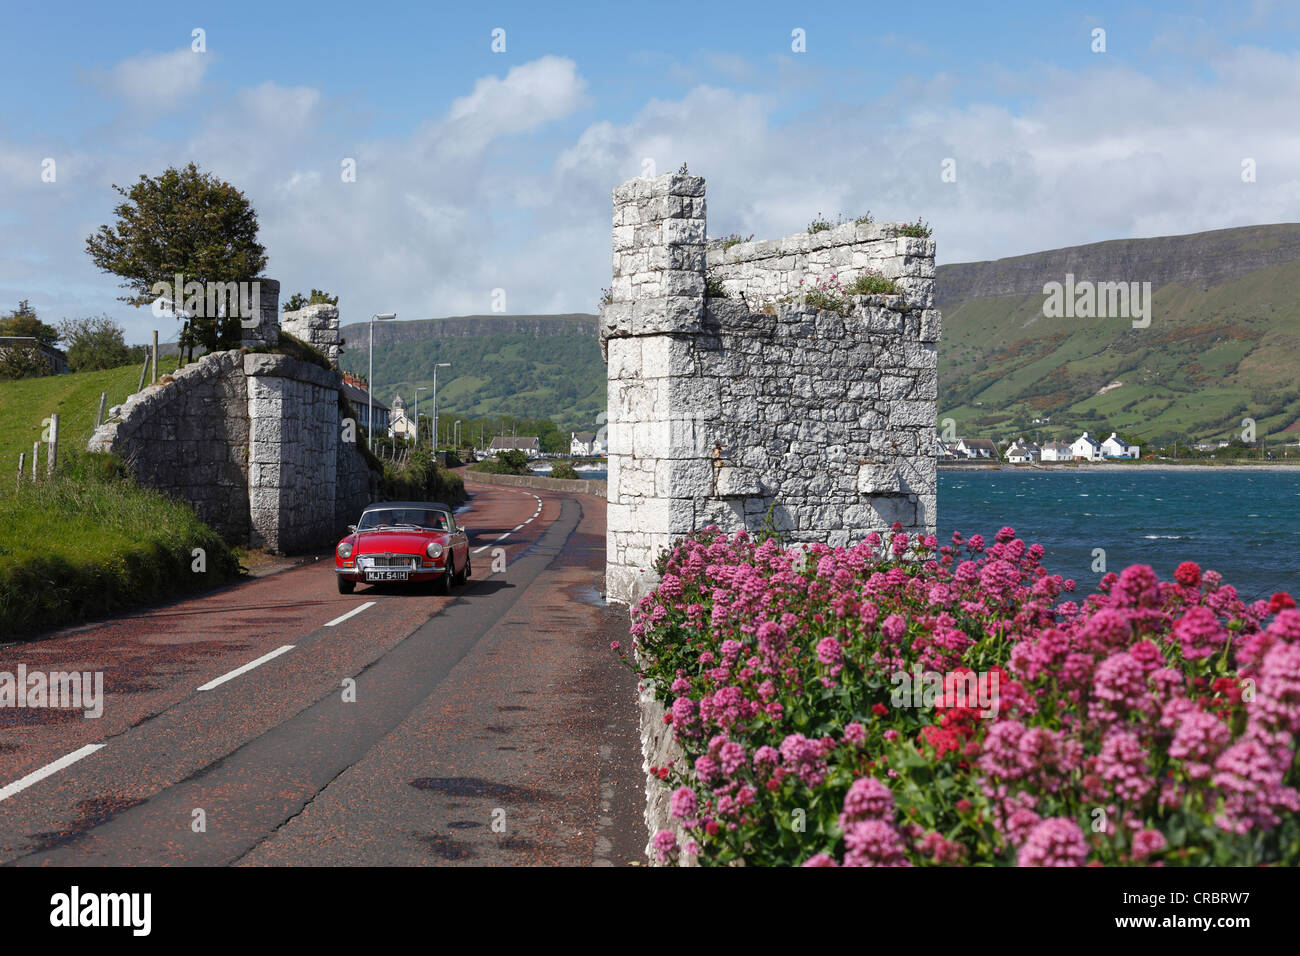 The White Arch, remains of a railway bridge, Glenariff, County Antrim, Northern Ireland, United Kingdom, Europe, PublicGround Stock Photo